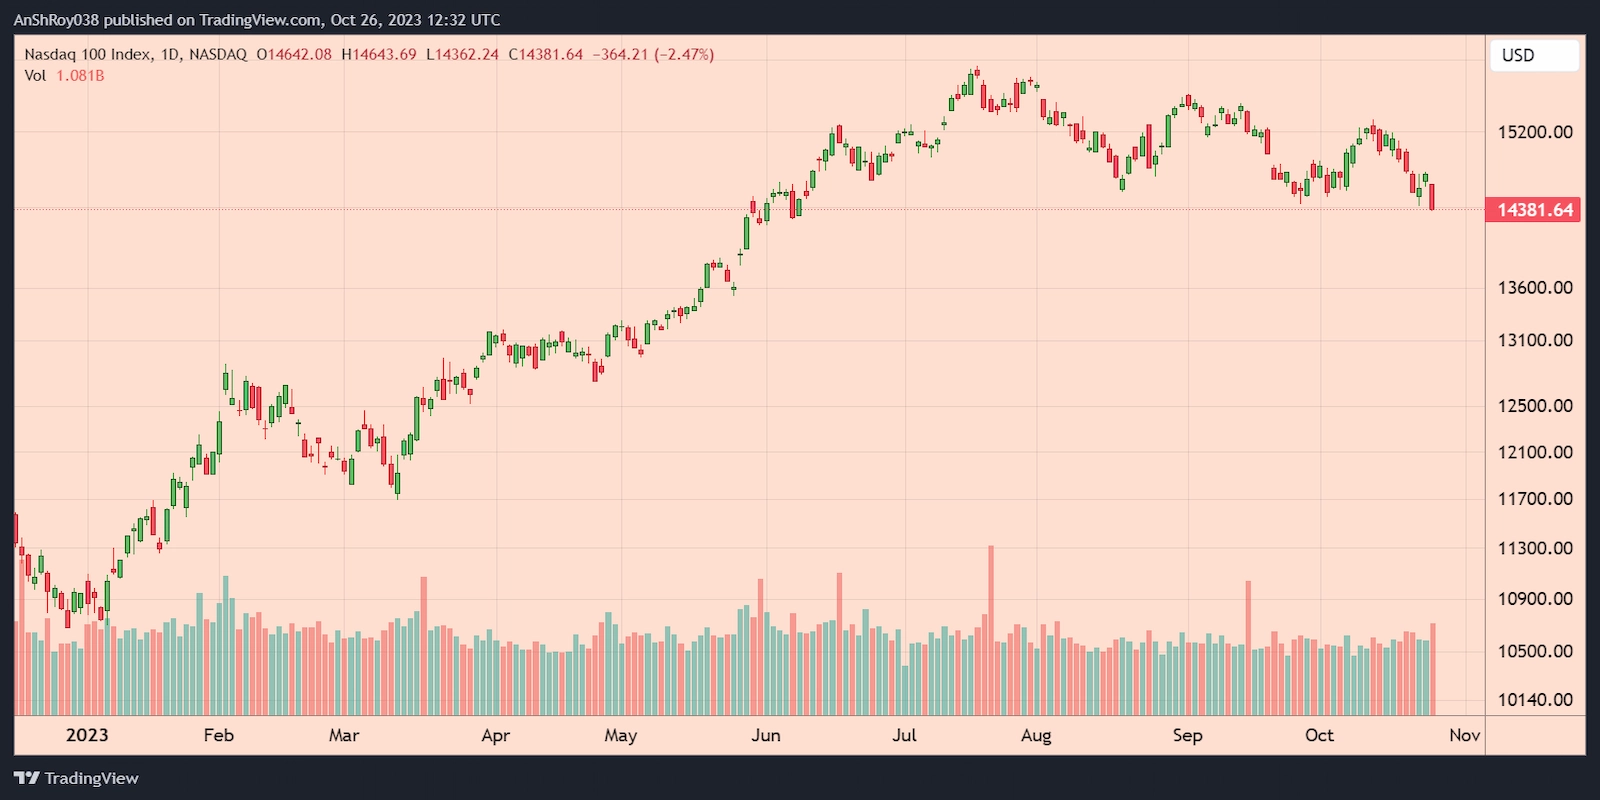 NASDAQ price dropped sharply on Oct. 25.